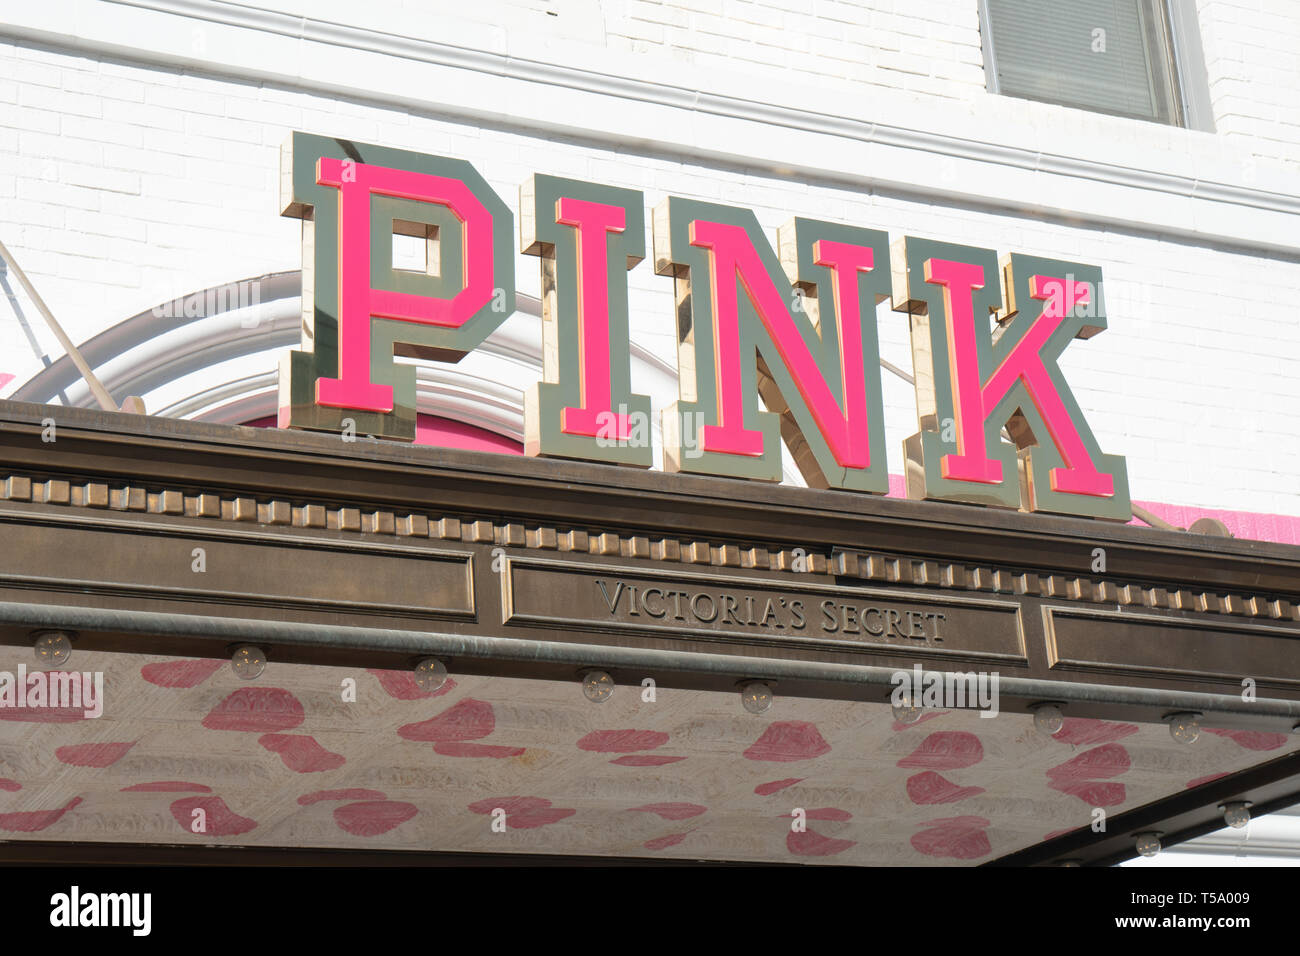 Victoria's Secret Pink Plastic and Snake Print New York London